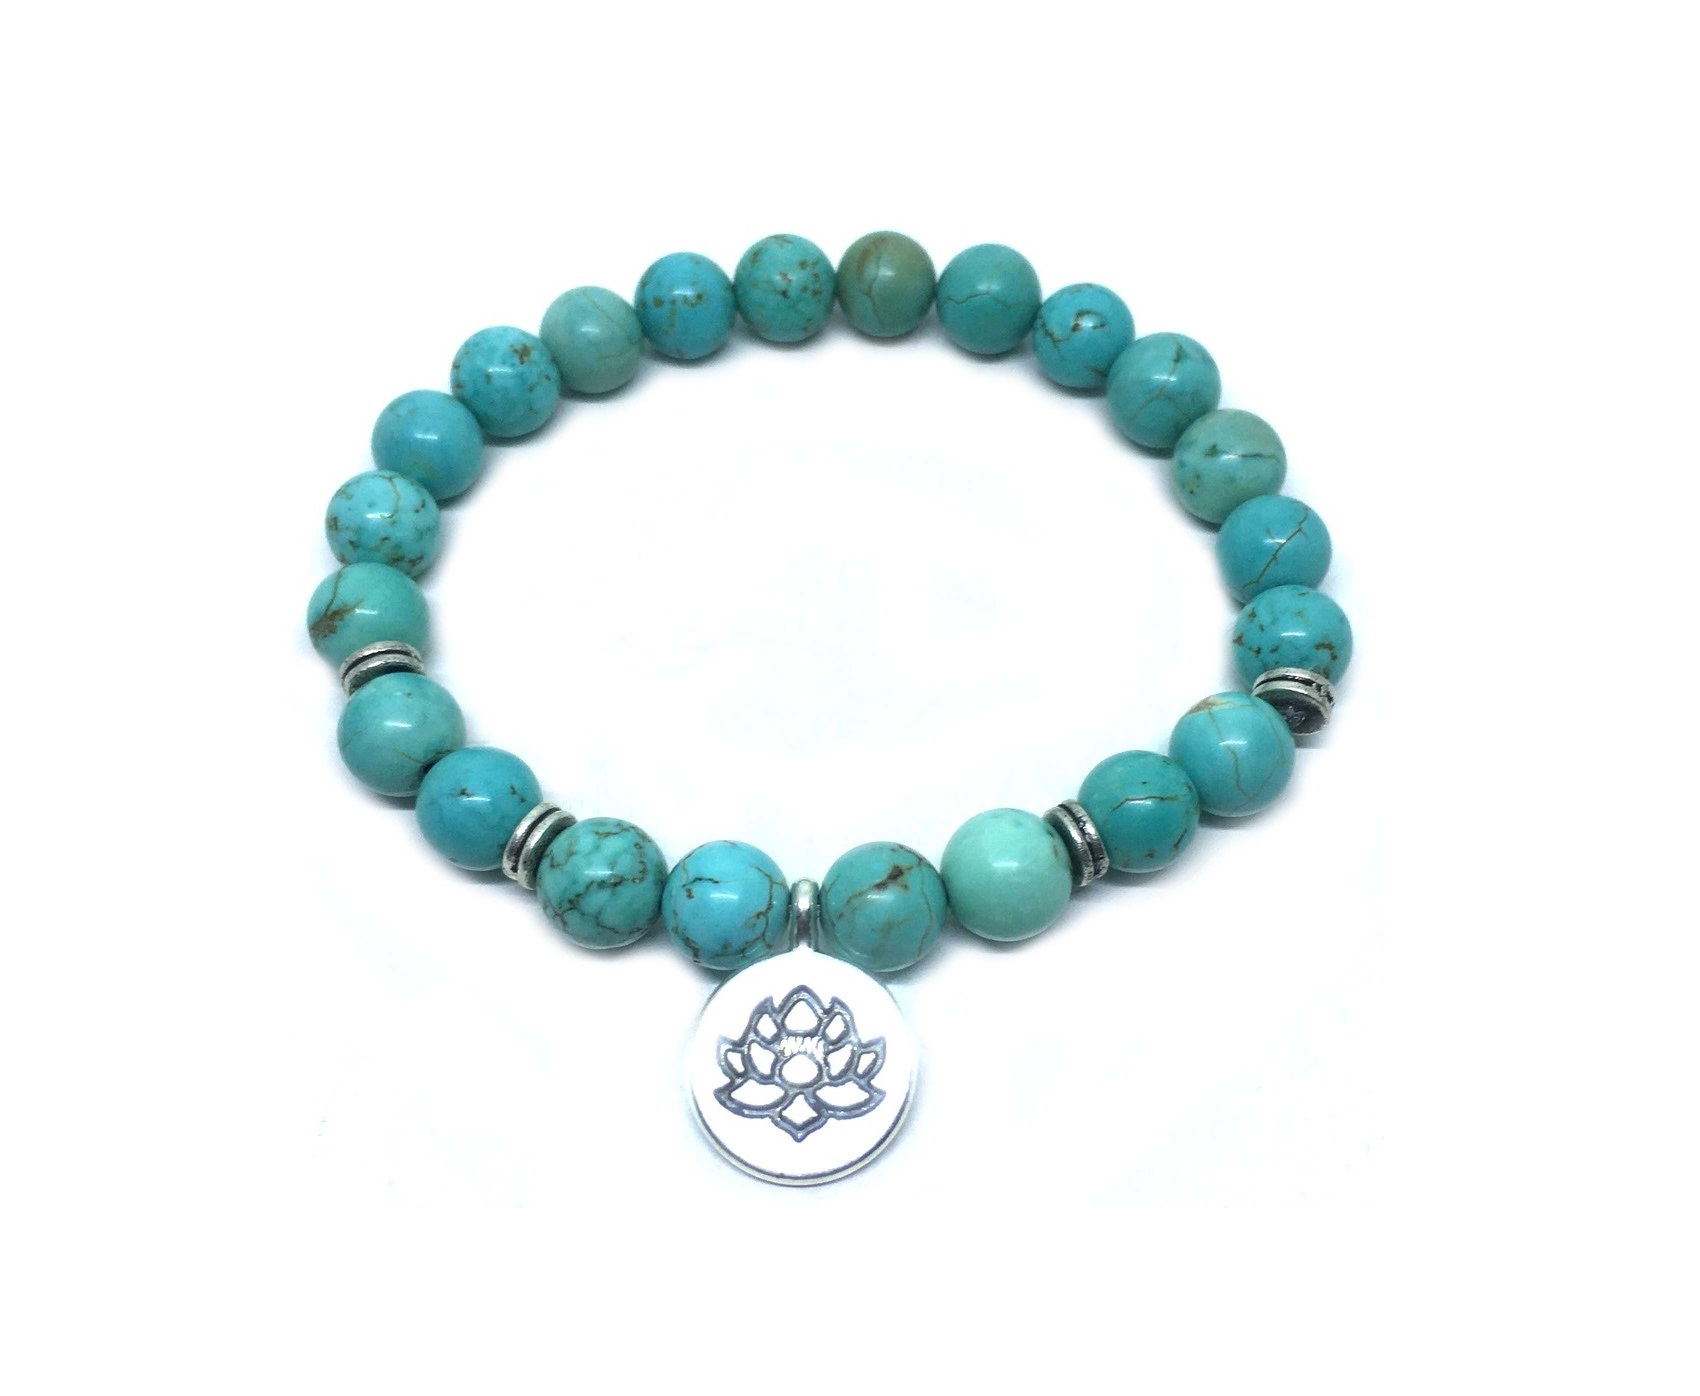 Yoga Turquoise Bead Bracelet